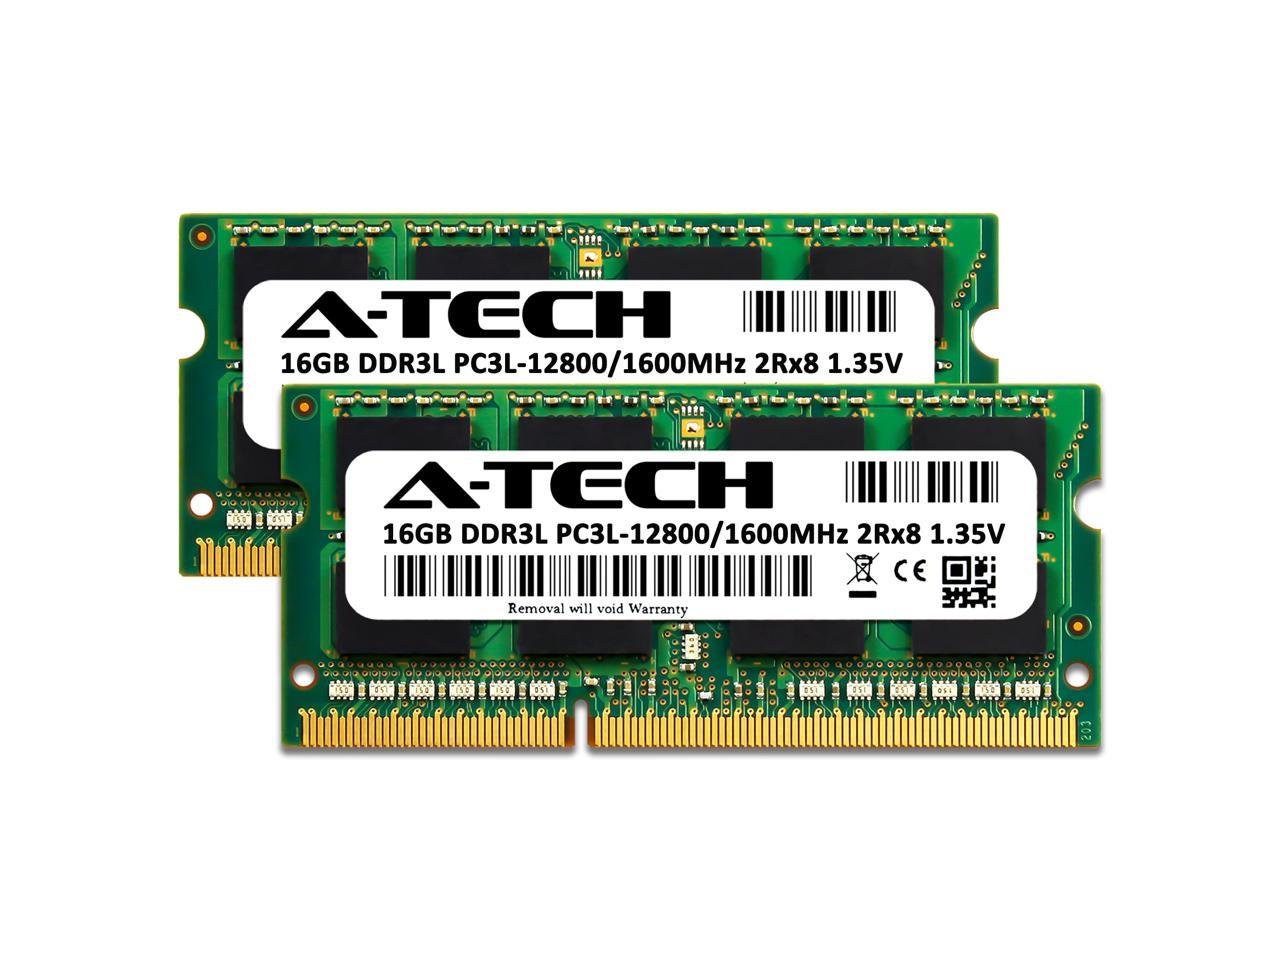 A-Tech 32GB (2x16GB) DDR3 / DDR3L 1600MHz SODIMM PC3-12800 2Rx8 1.35V